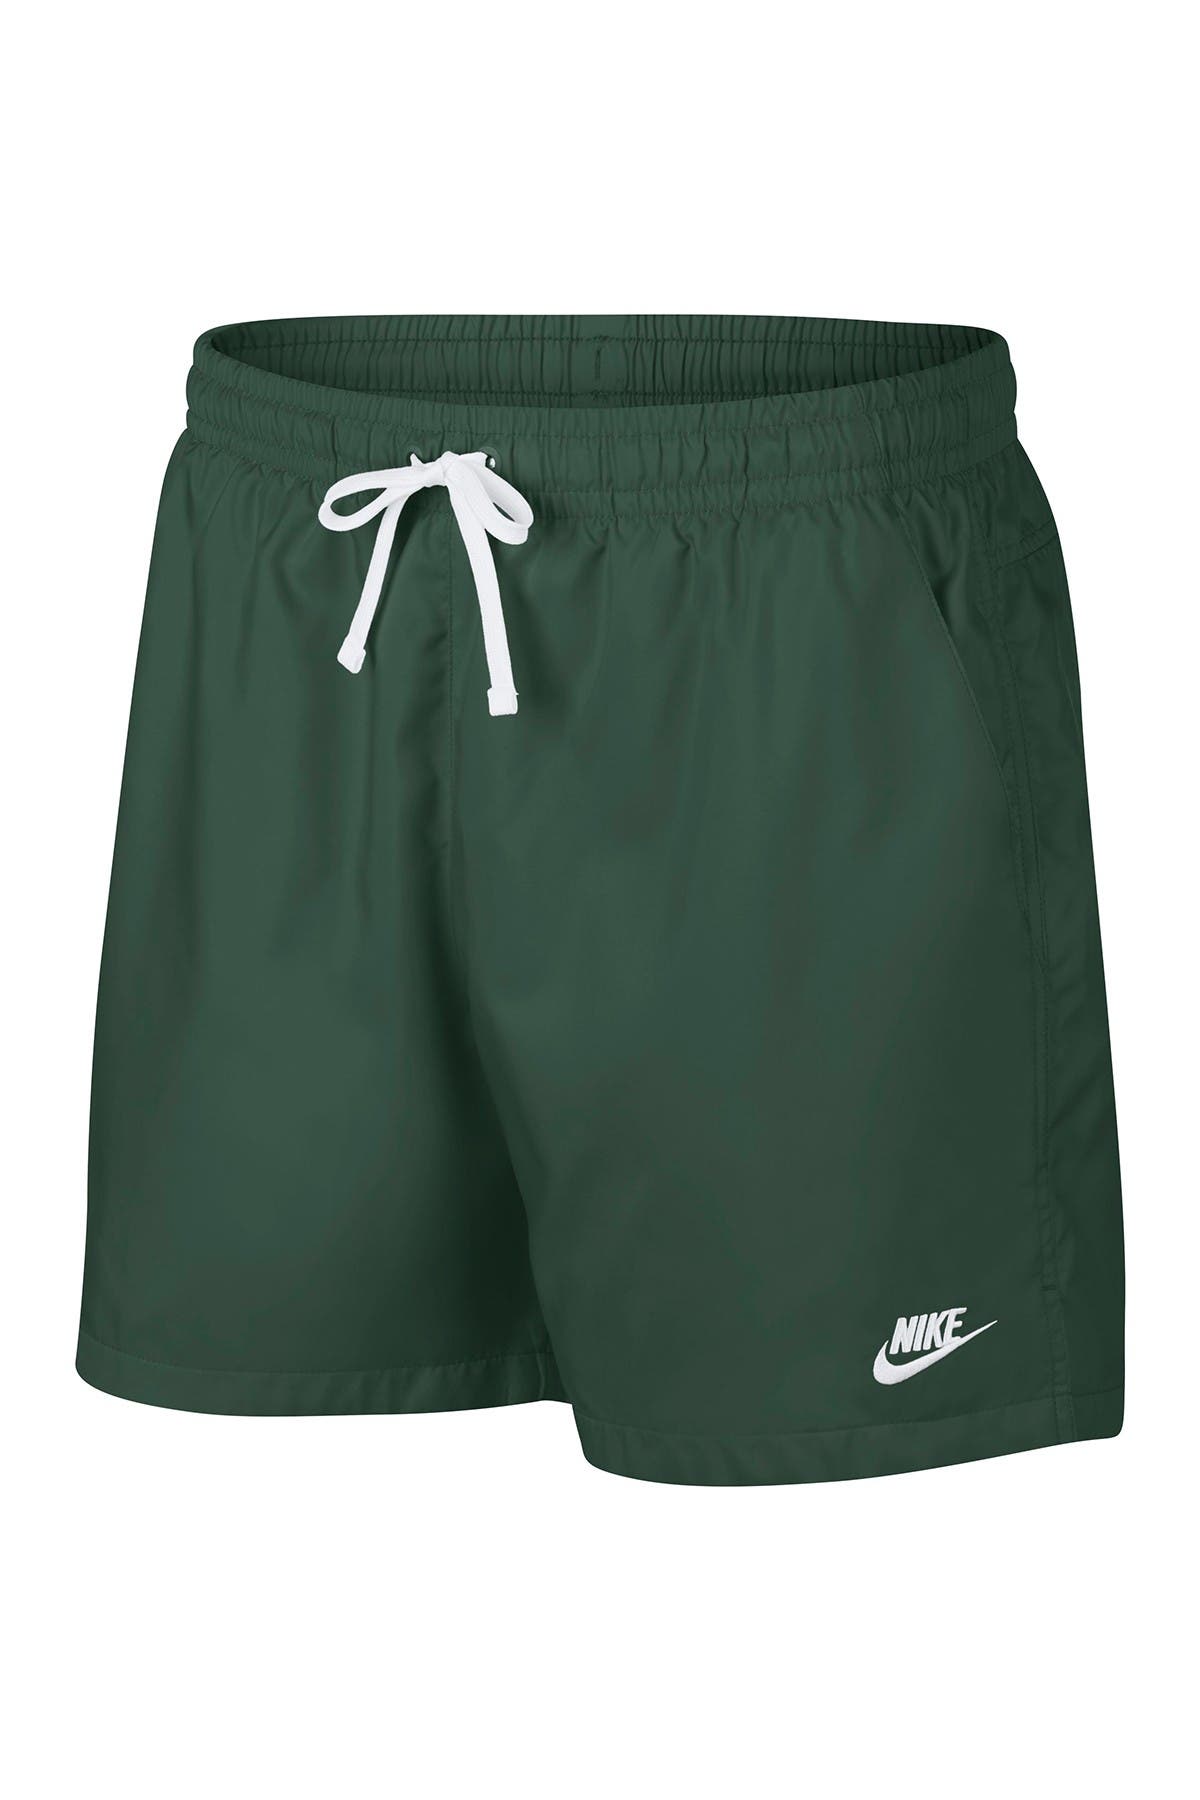 Nike | Flow Woven Shorts | Nordstrom Rack